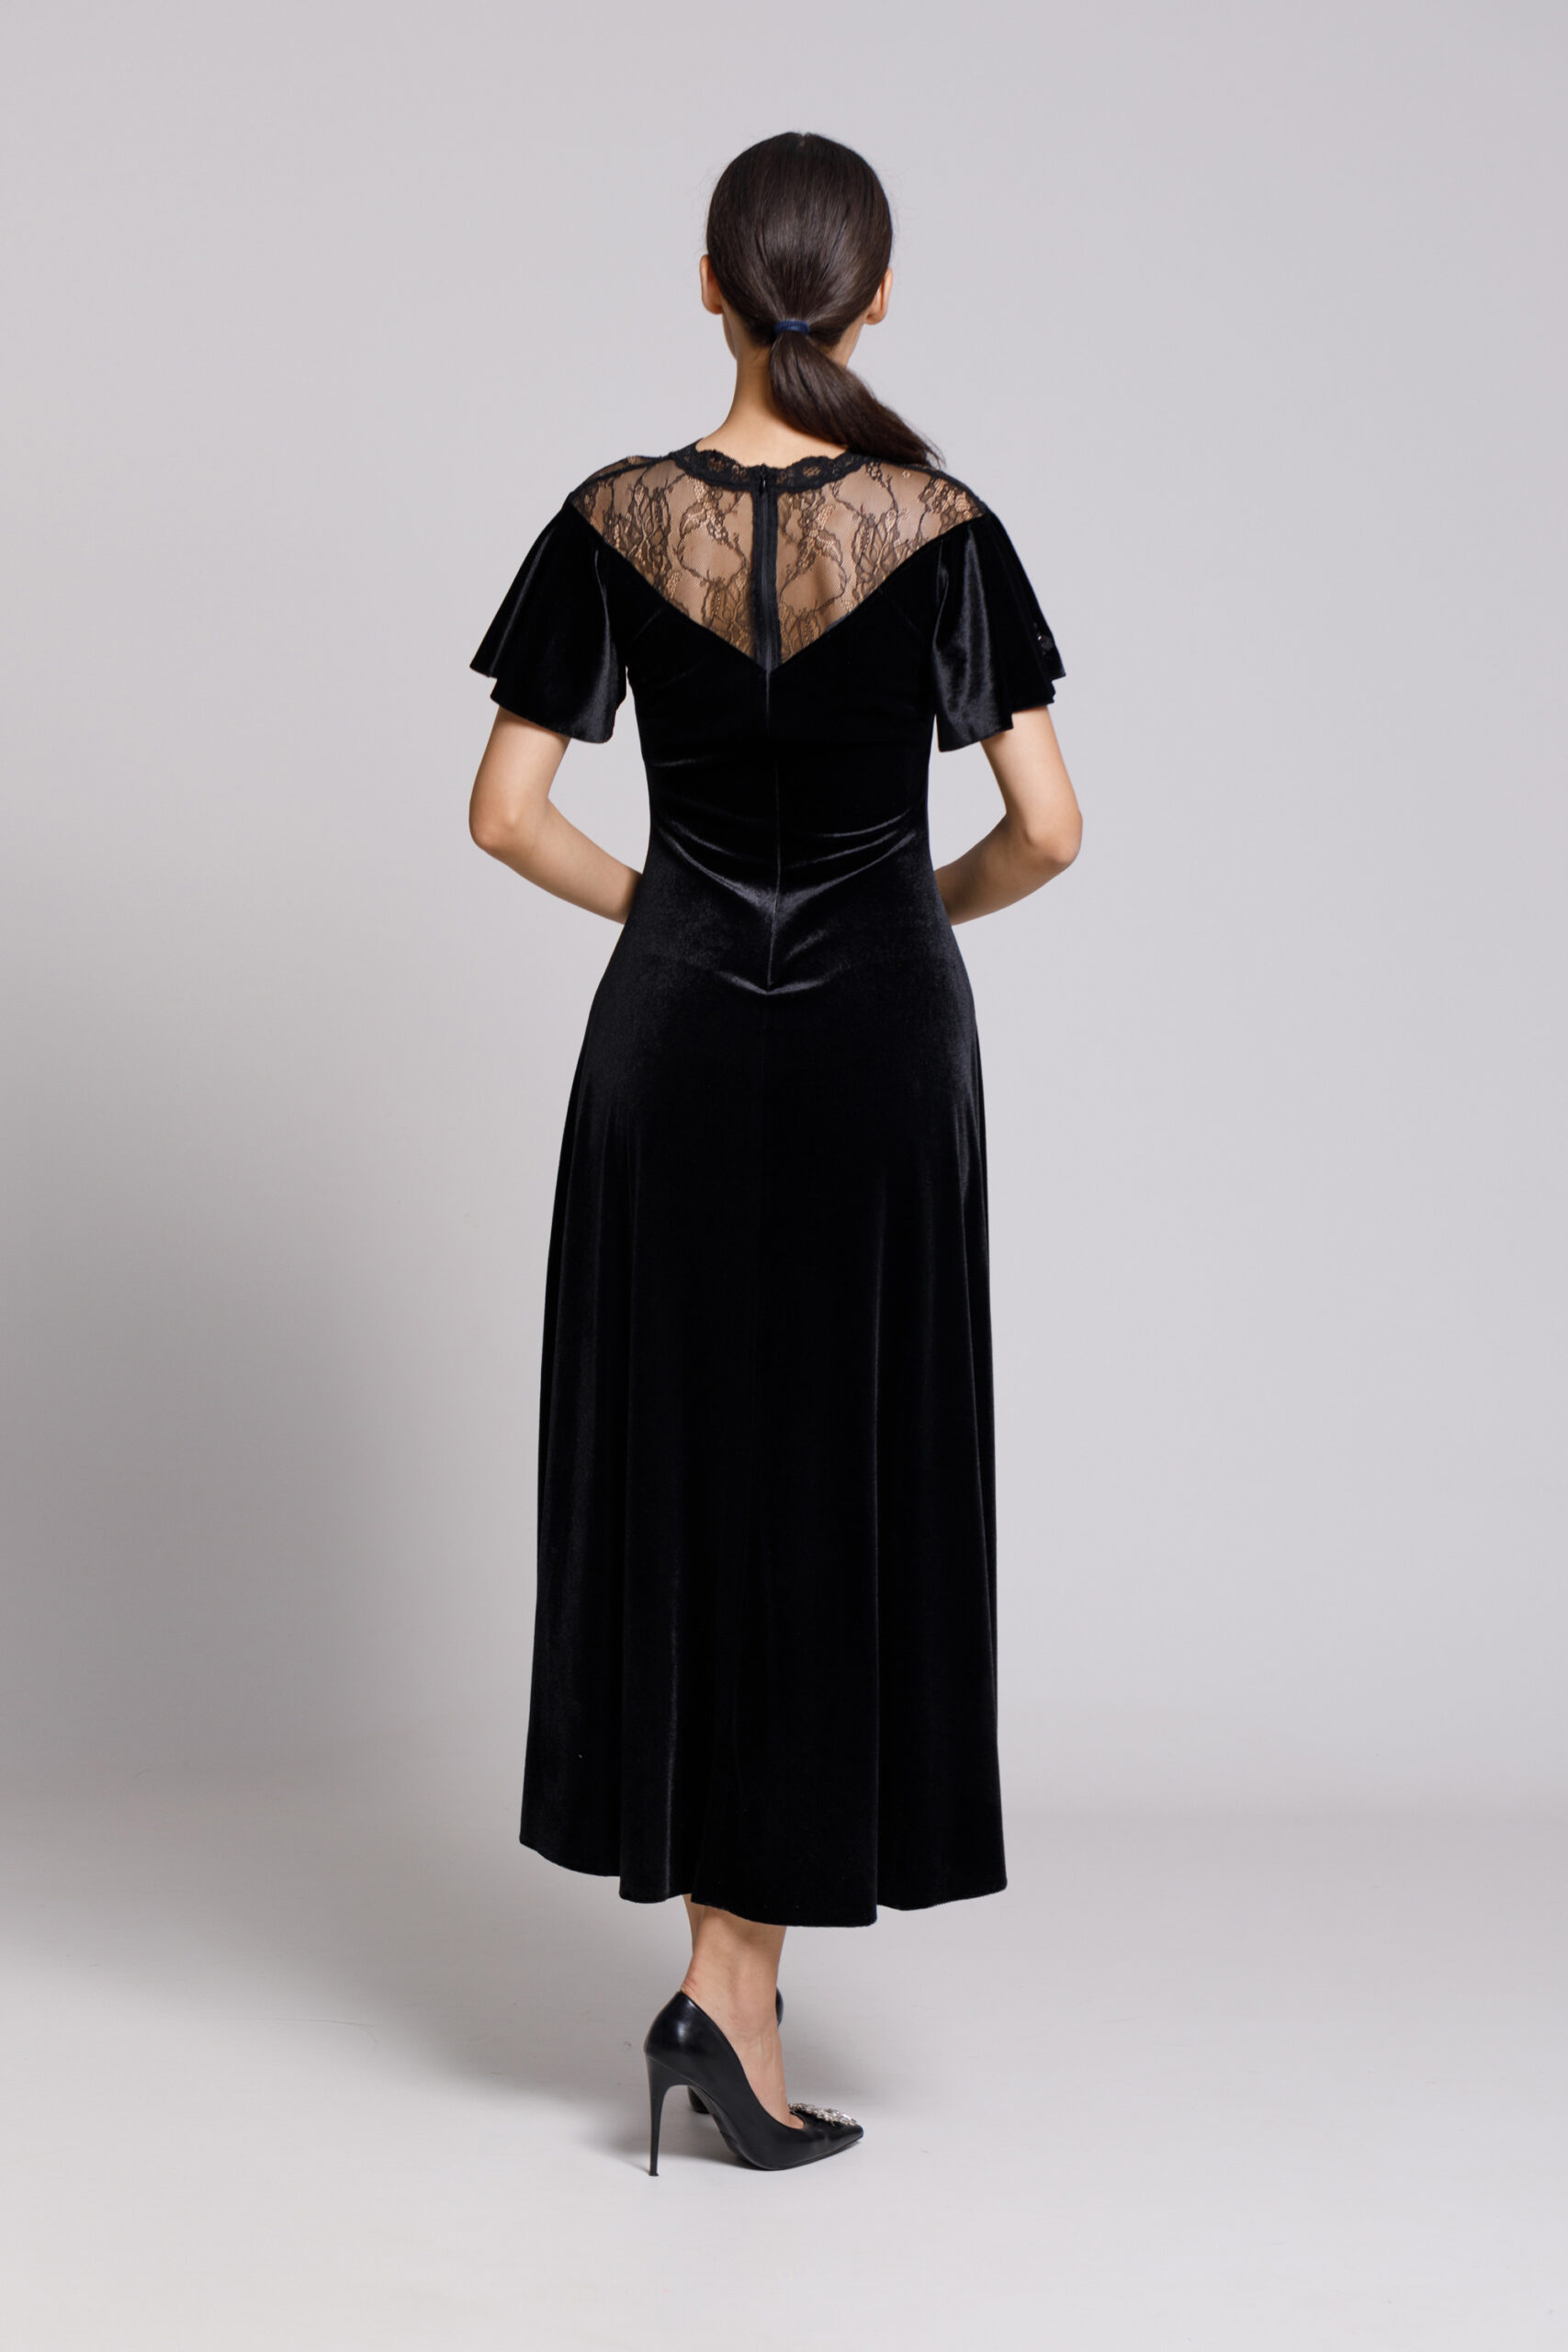 SERENY delicate black velvet and lace dress. Natural fabrics, original design, handmade embroidery